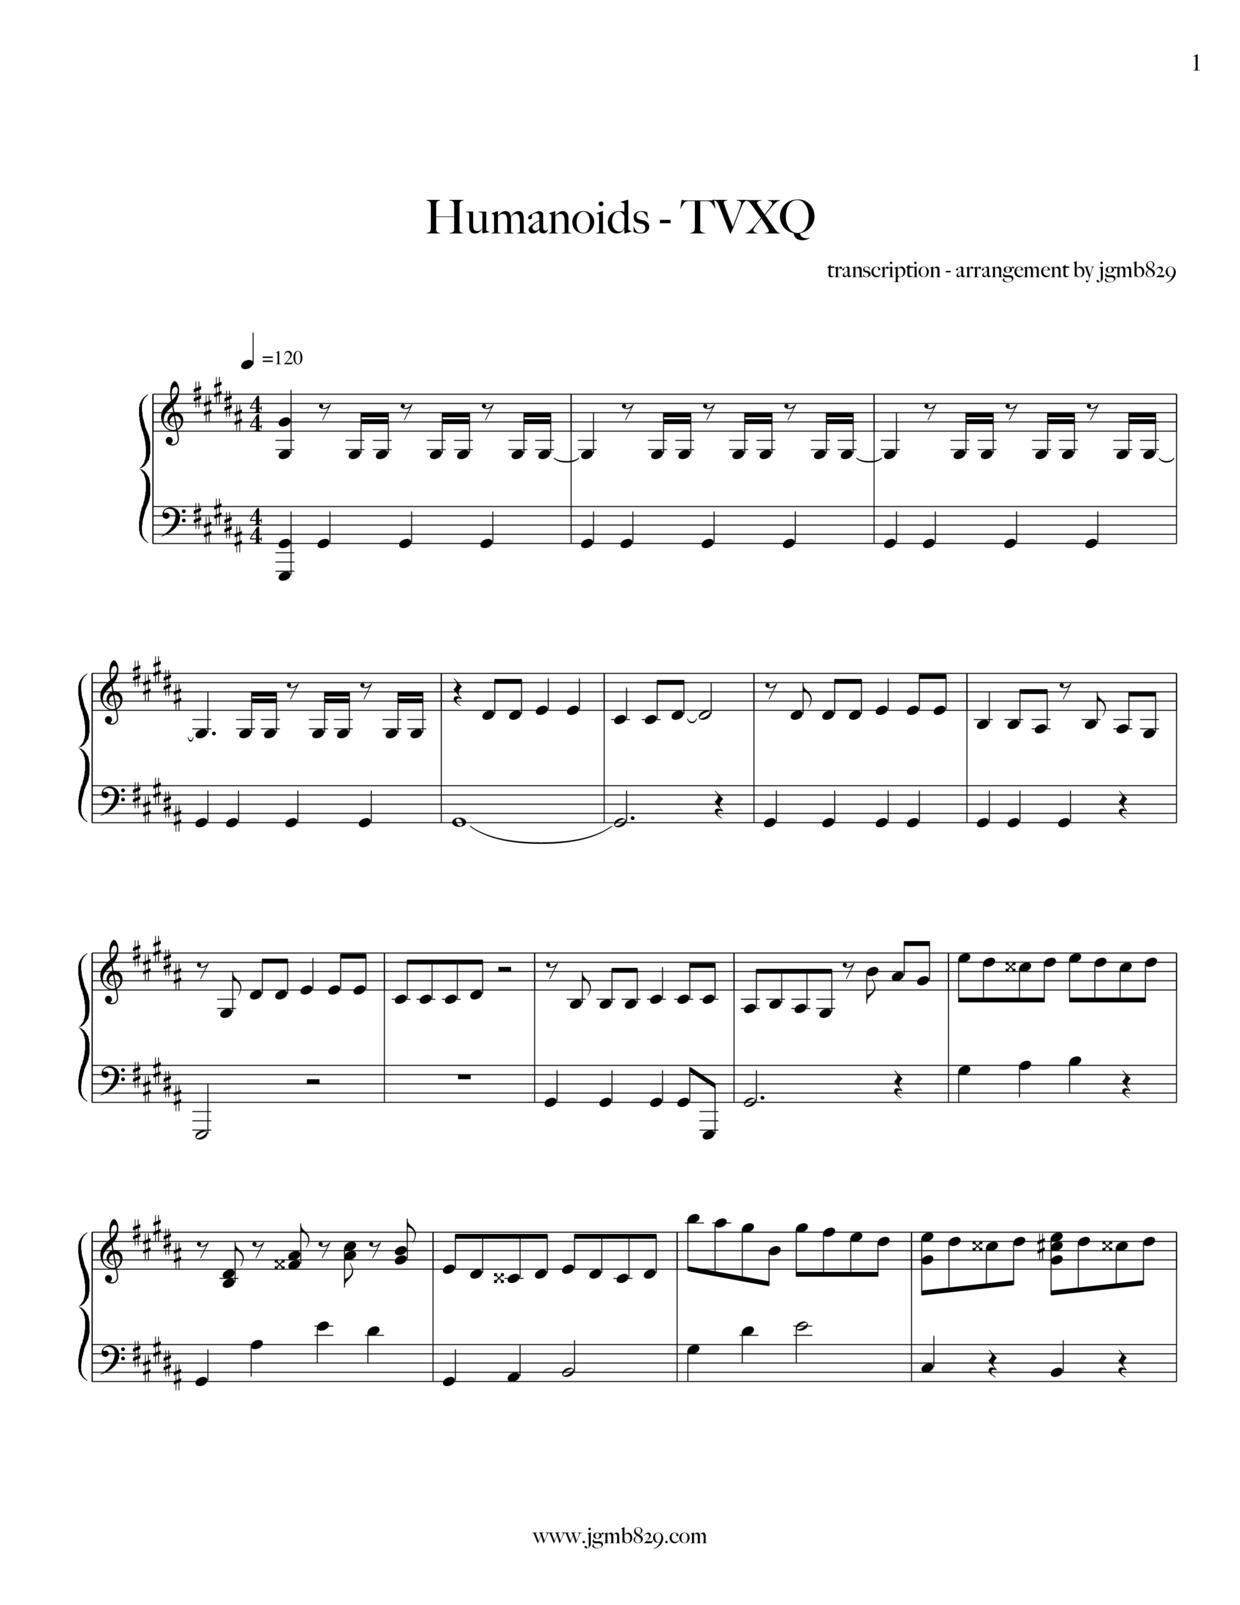 Humanoidsピアノ譜